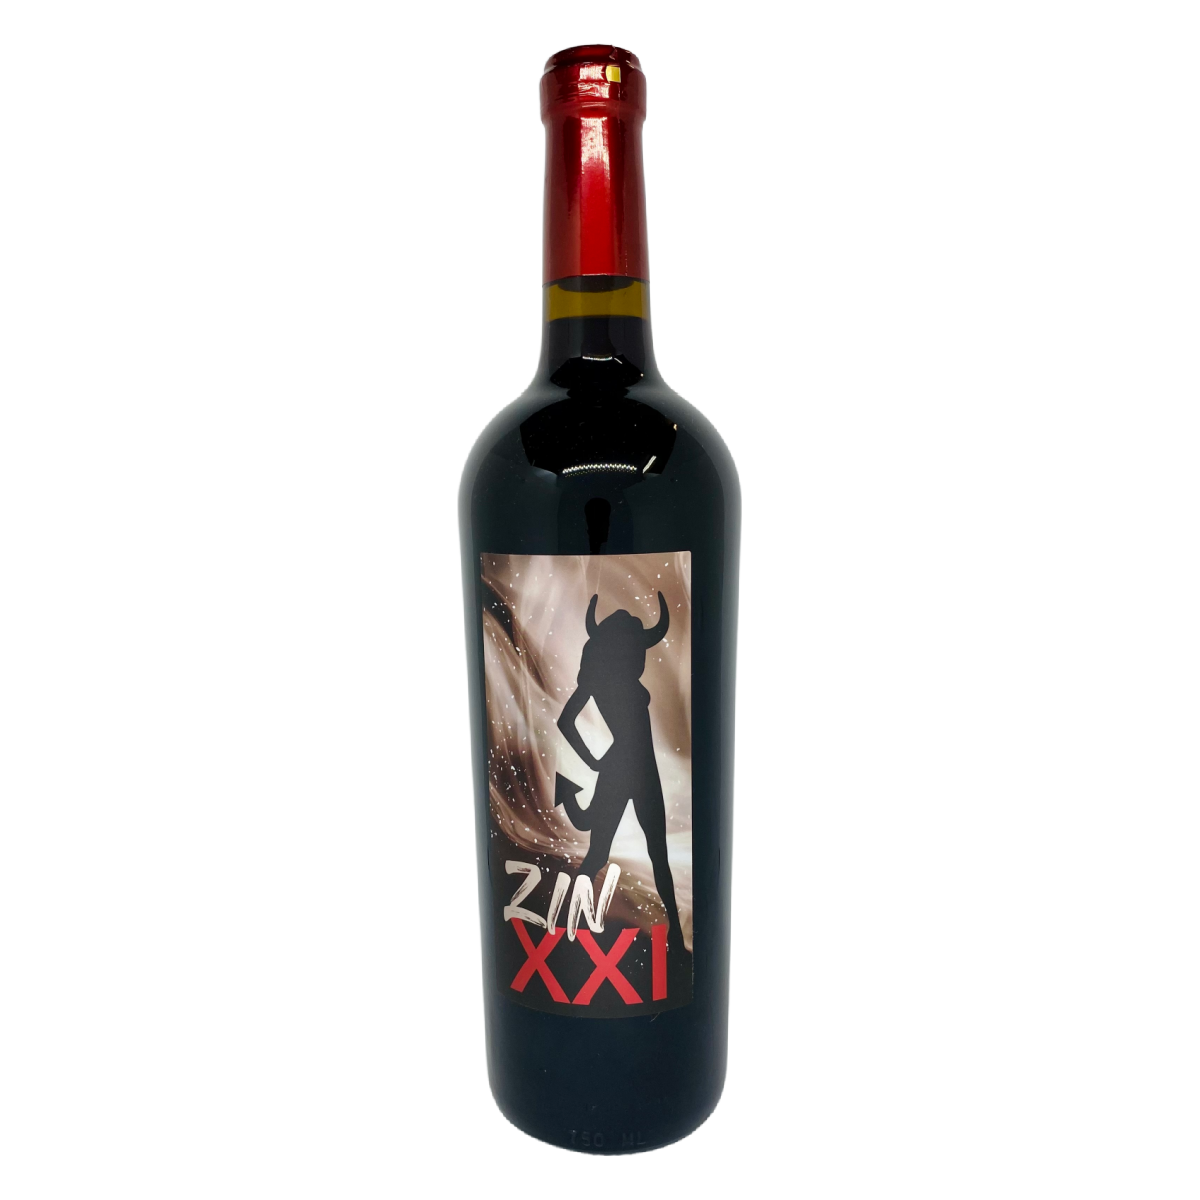 ZIN XXI Bottle | STONE PILLAR VINEYARD & WINERY